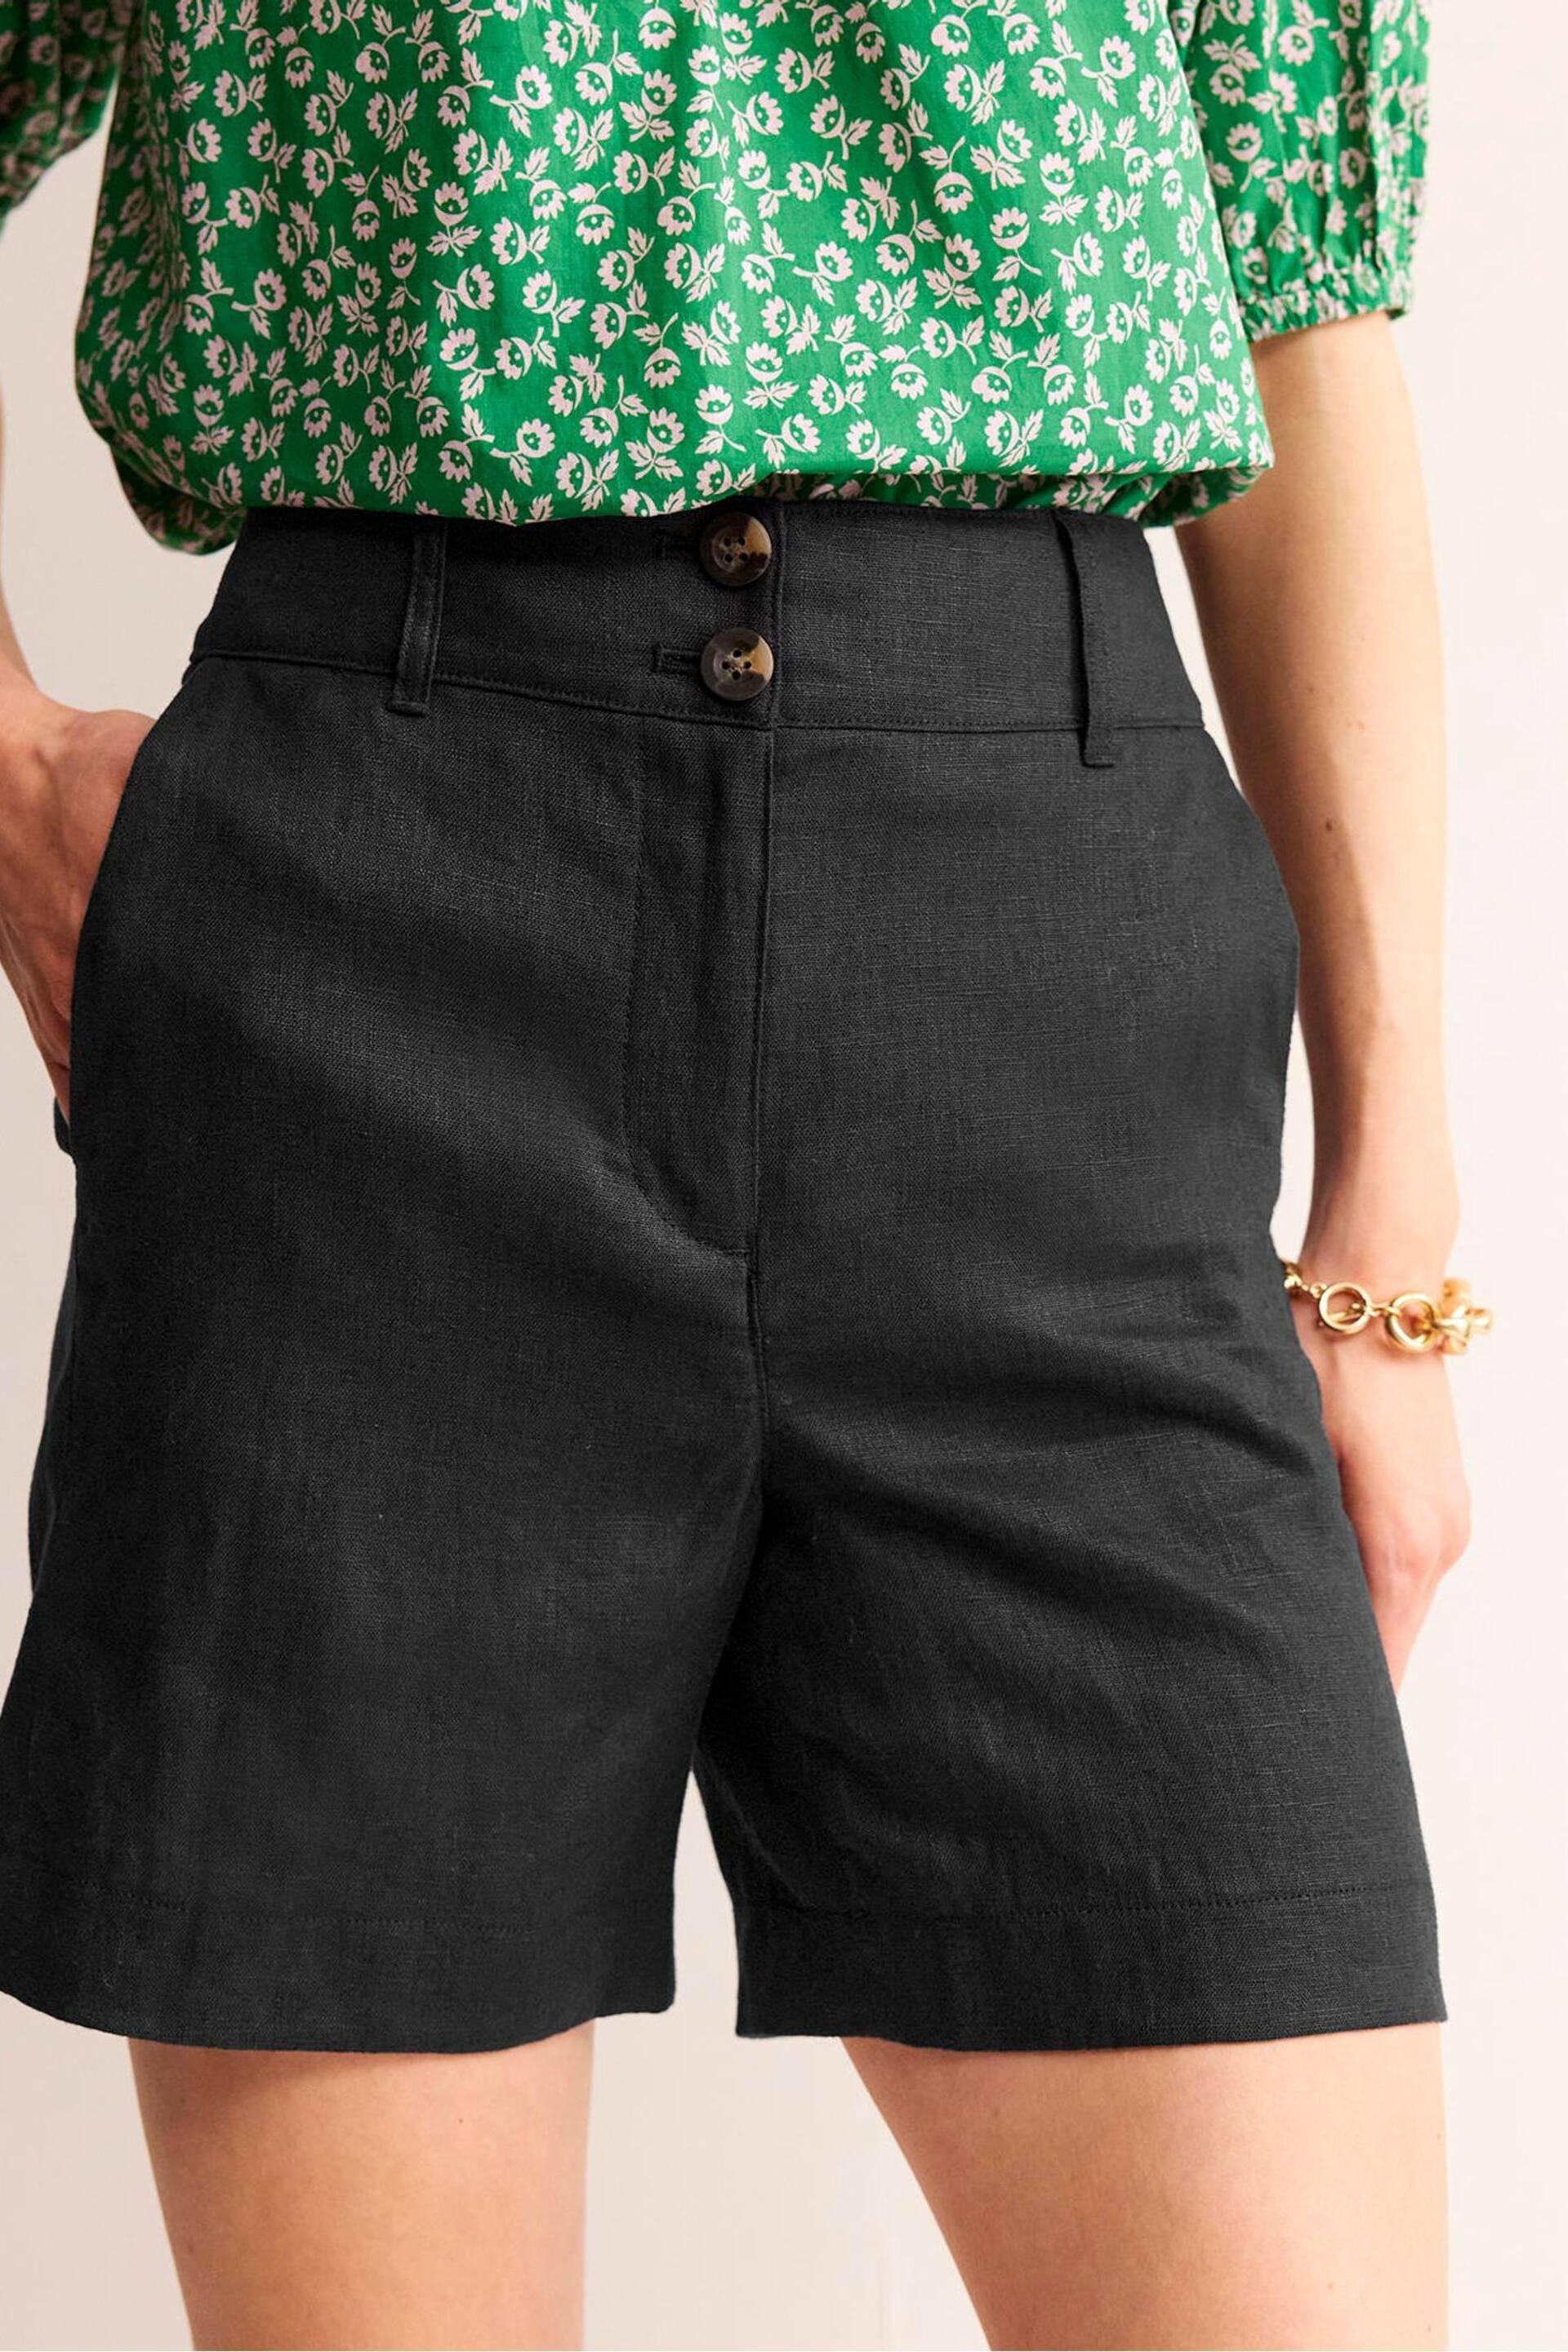 Boden Black Westbourne Linen Shorts - Image 4 of 5